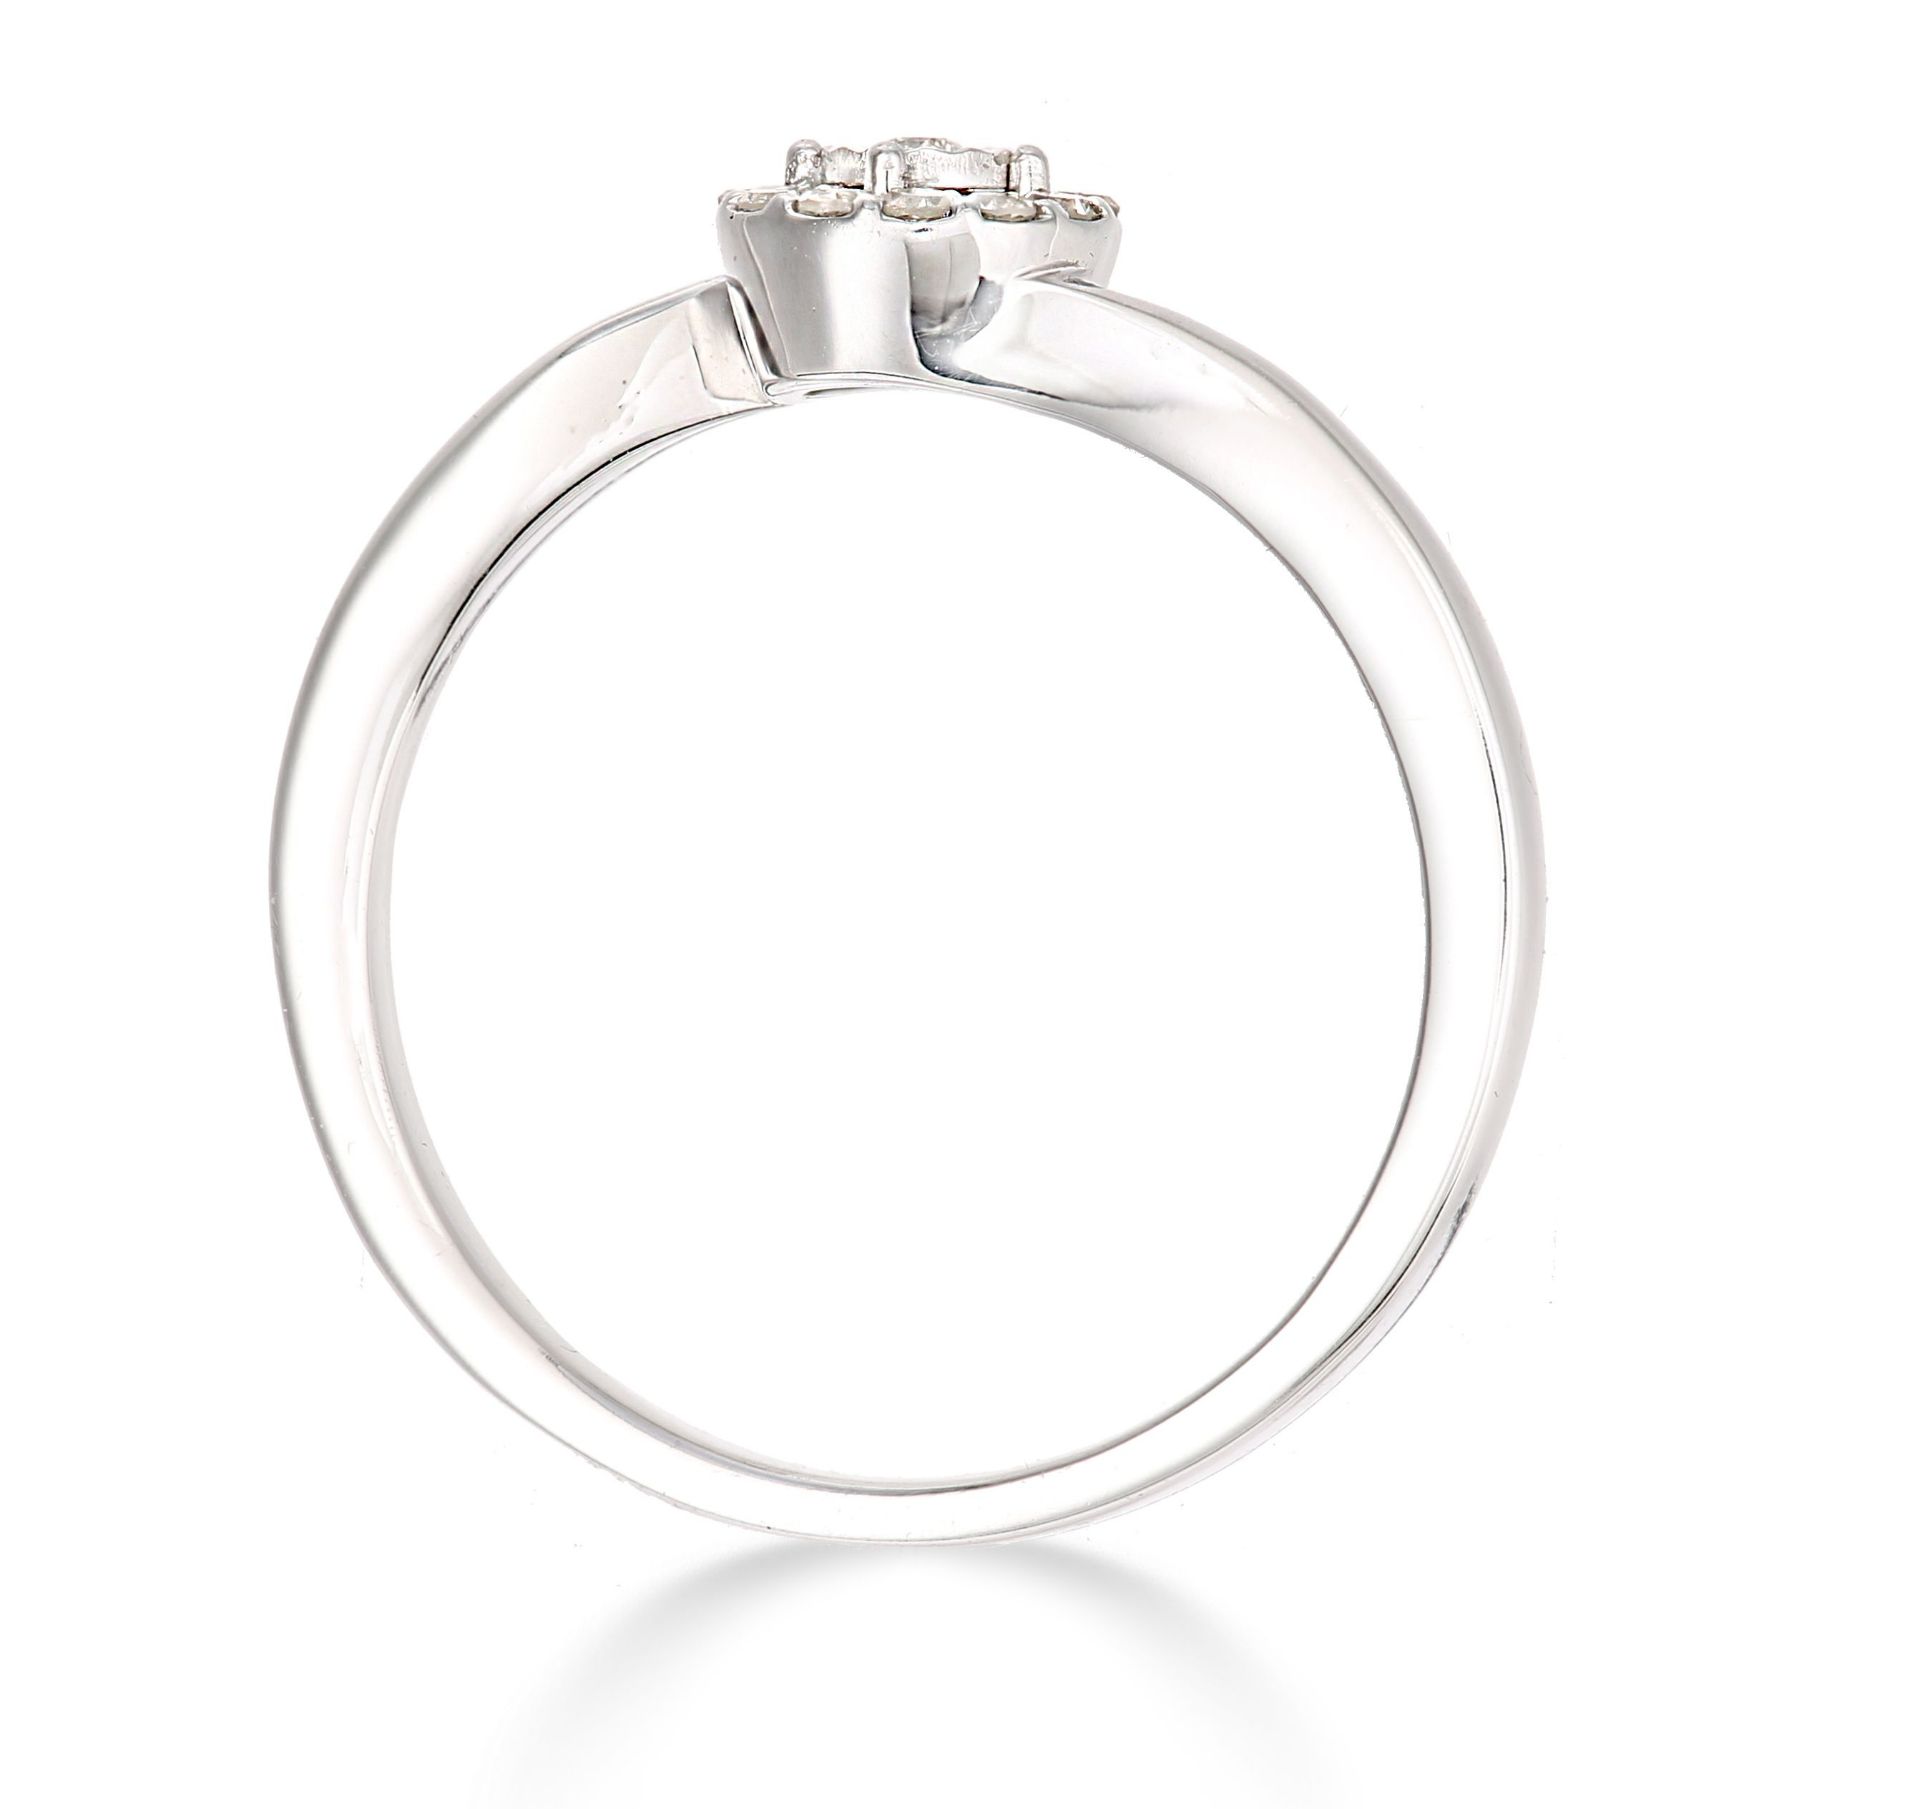 White Gold Diamond Ring with subtle twist Size P RRP £550 (UR4362B